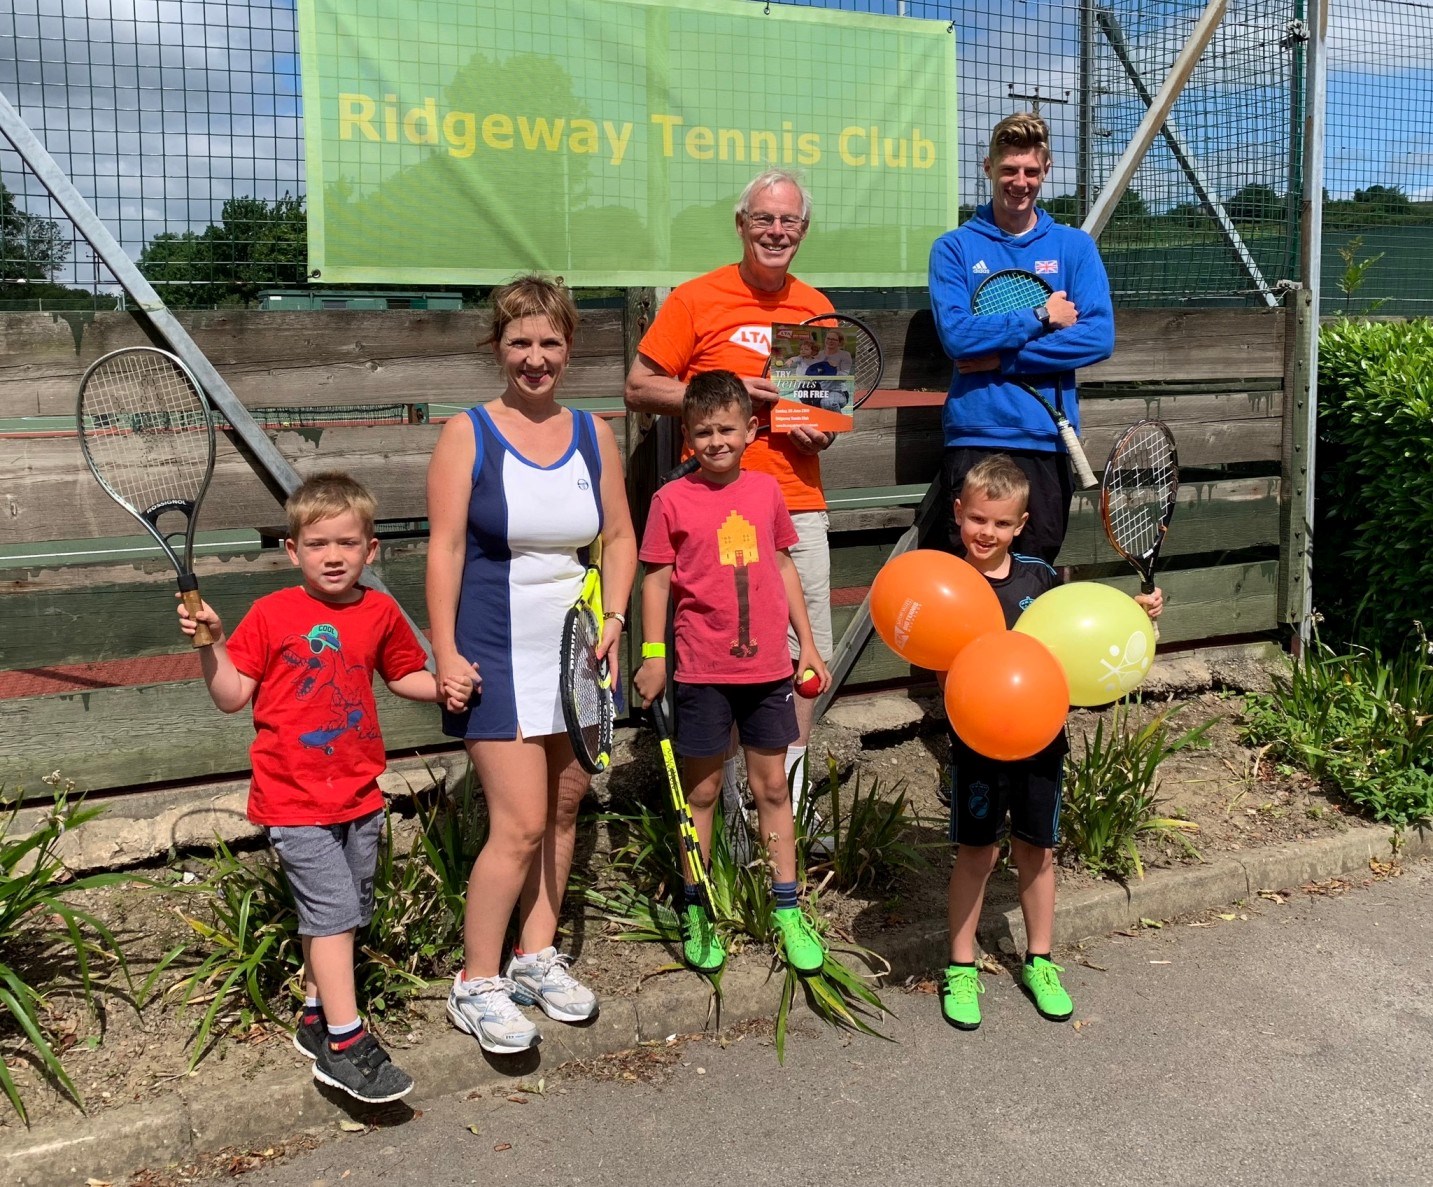 A family celebrating the 100th anniversary of the Ridgeway Tennis Club